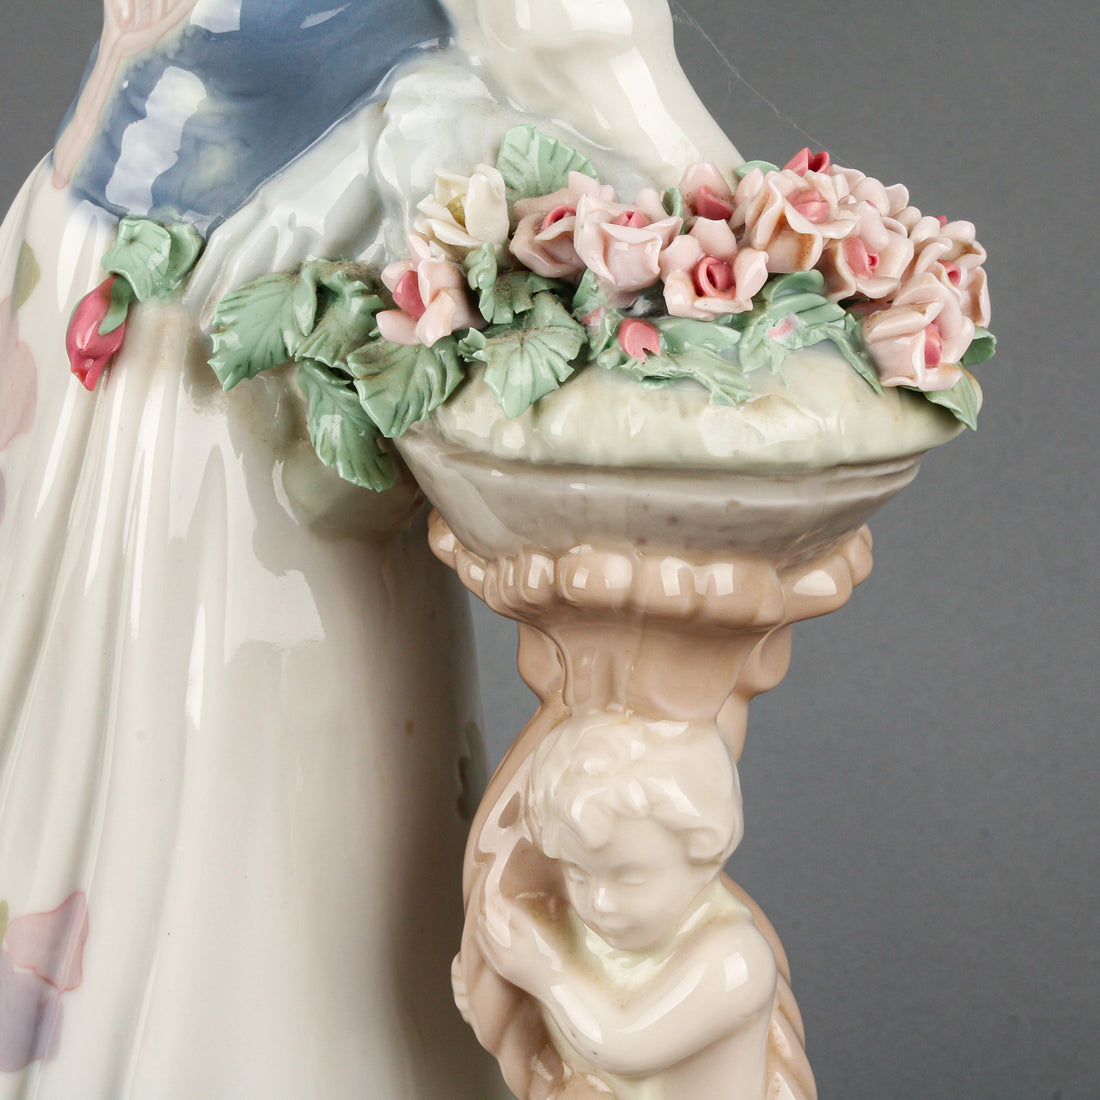 SANTA MONICA Lady with Flowers Figurine